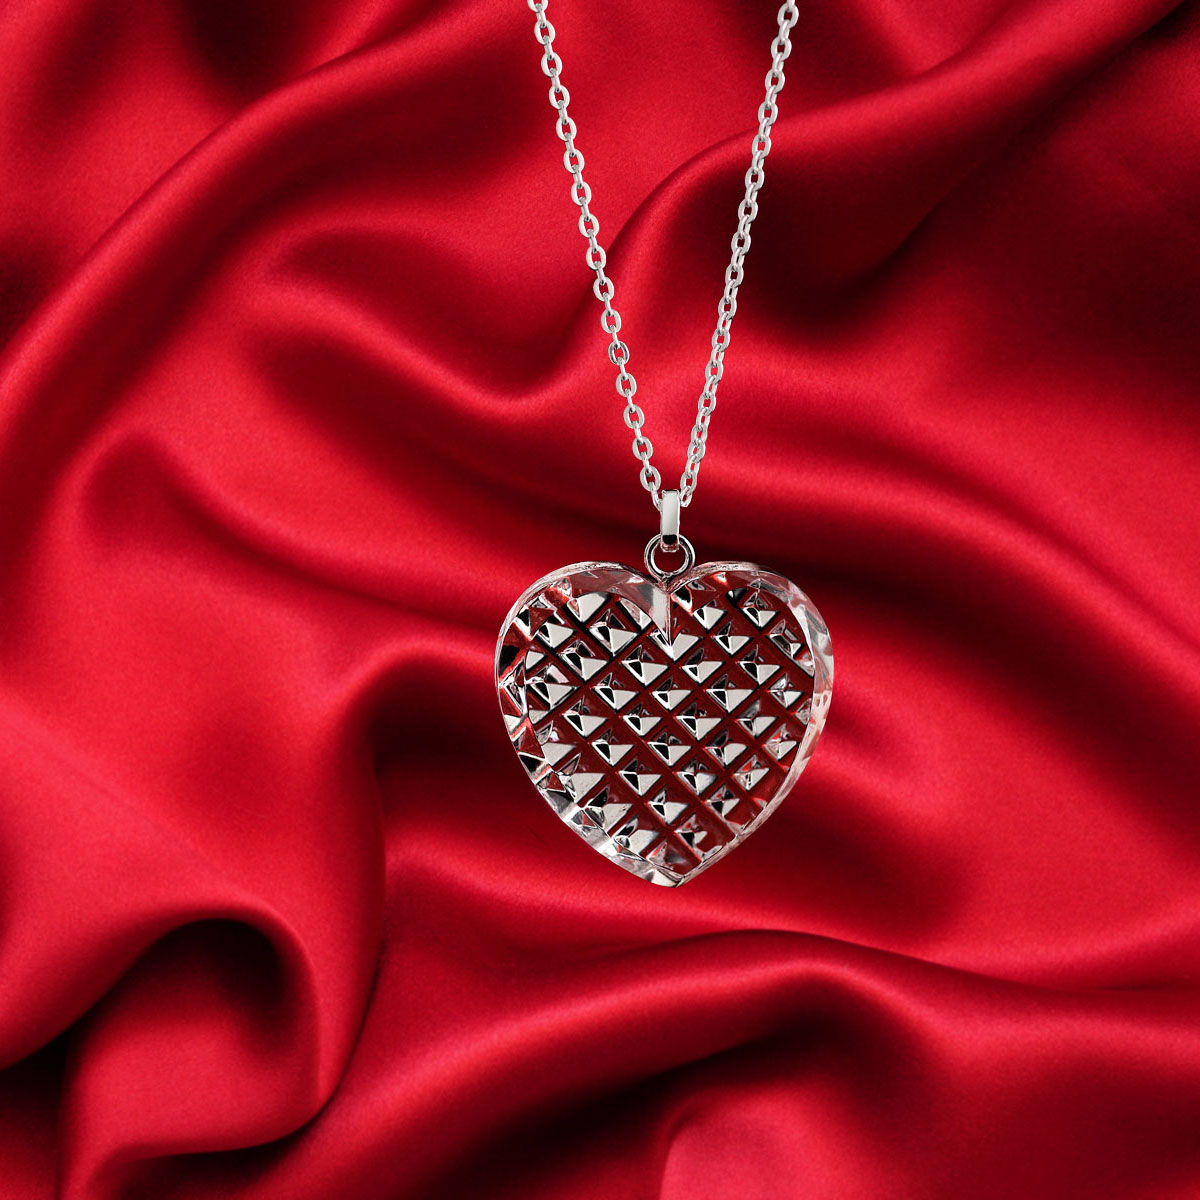 Cashs Ireland, Crystal Ireland's True Heart Pendant Necklace, Medium